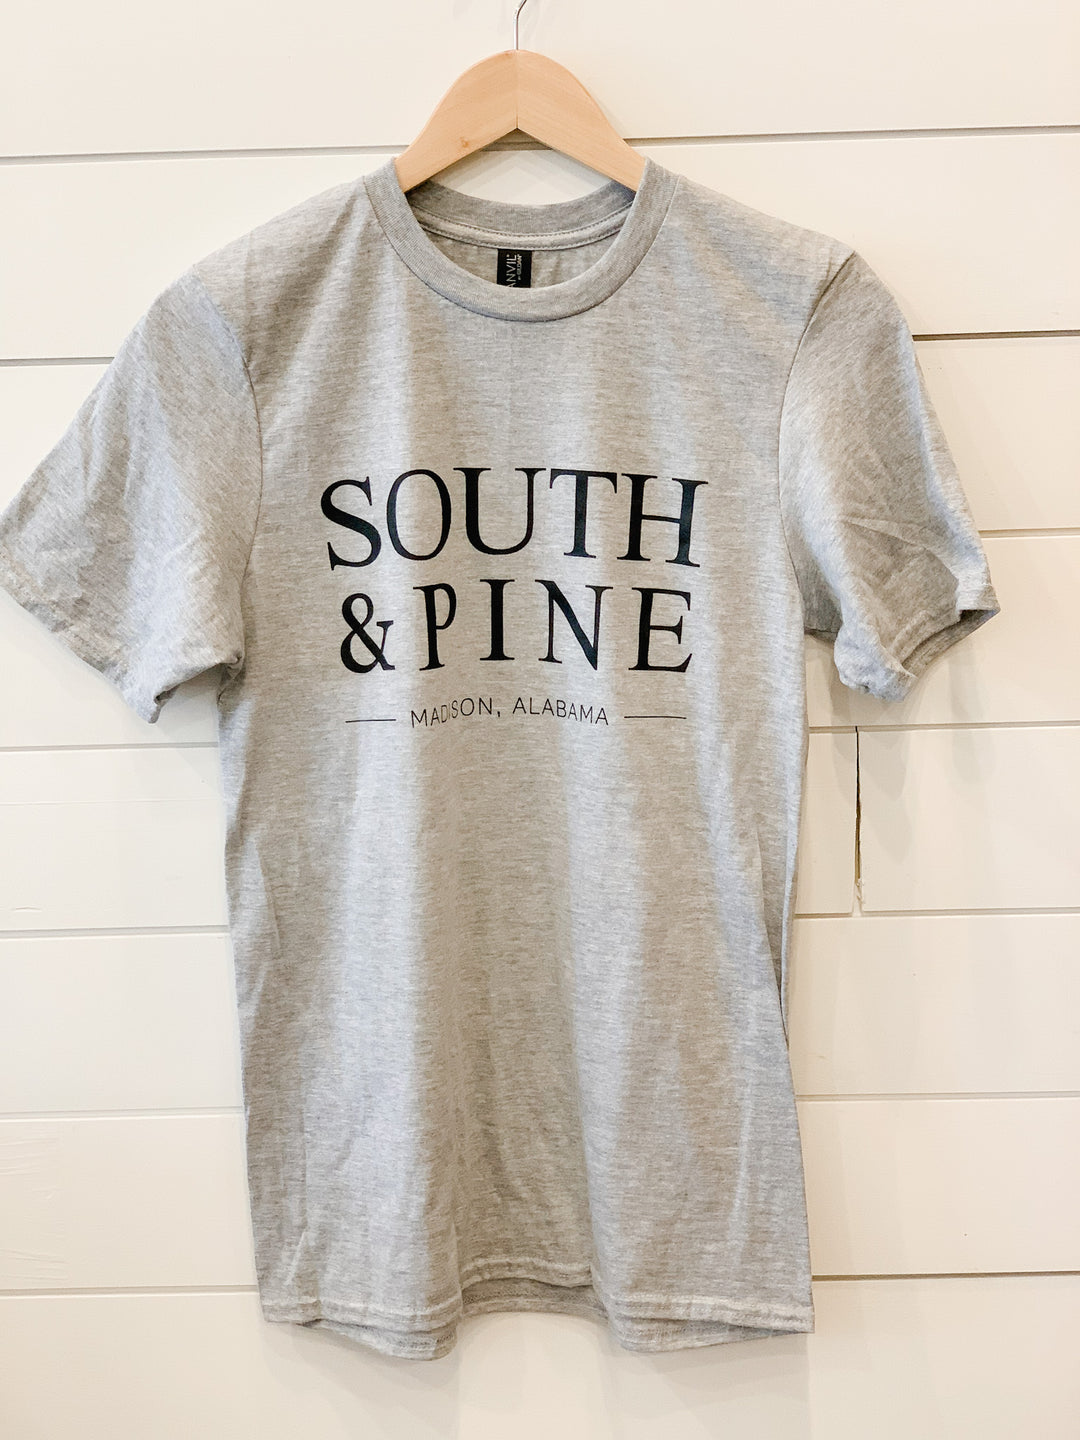 South & Pine T-Shirt - Gray & Black